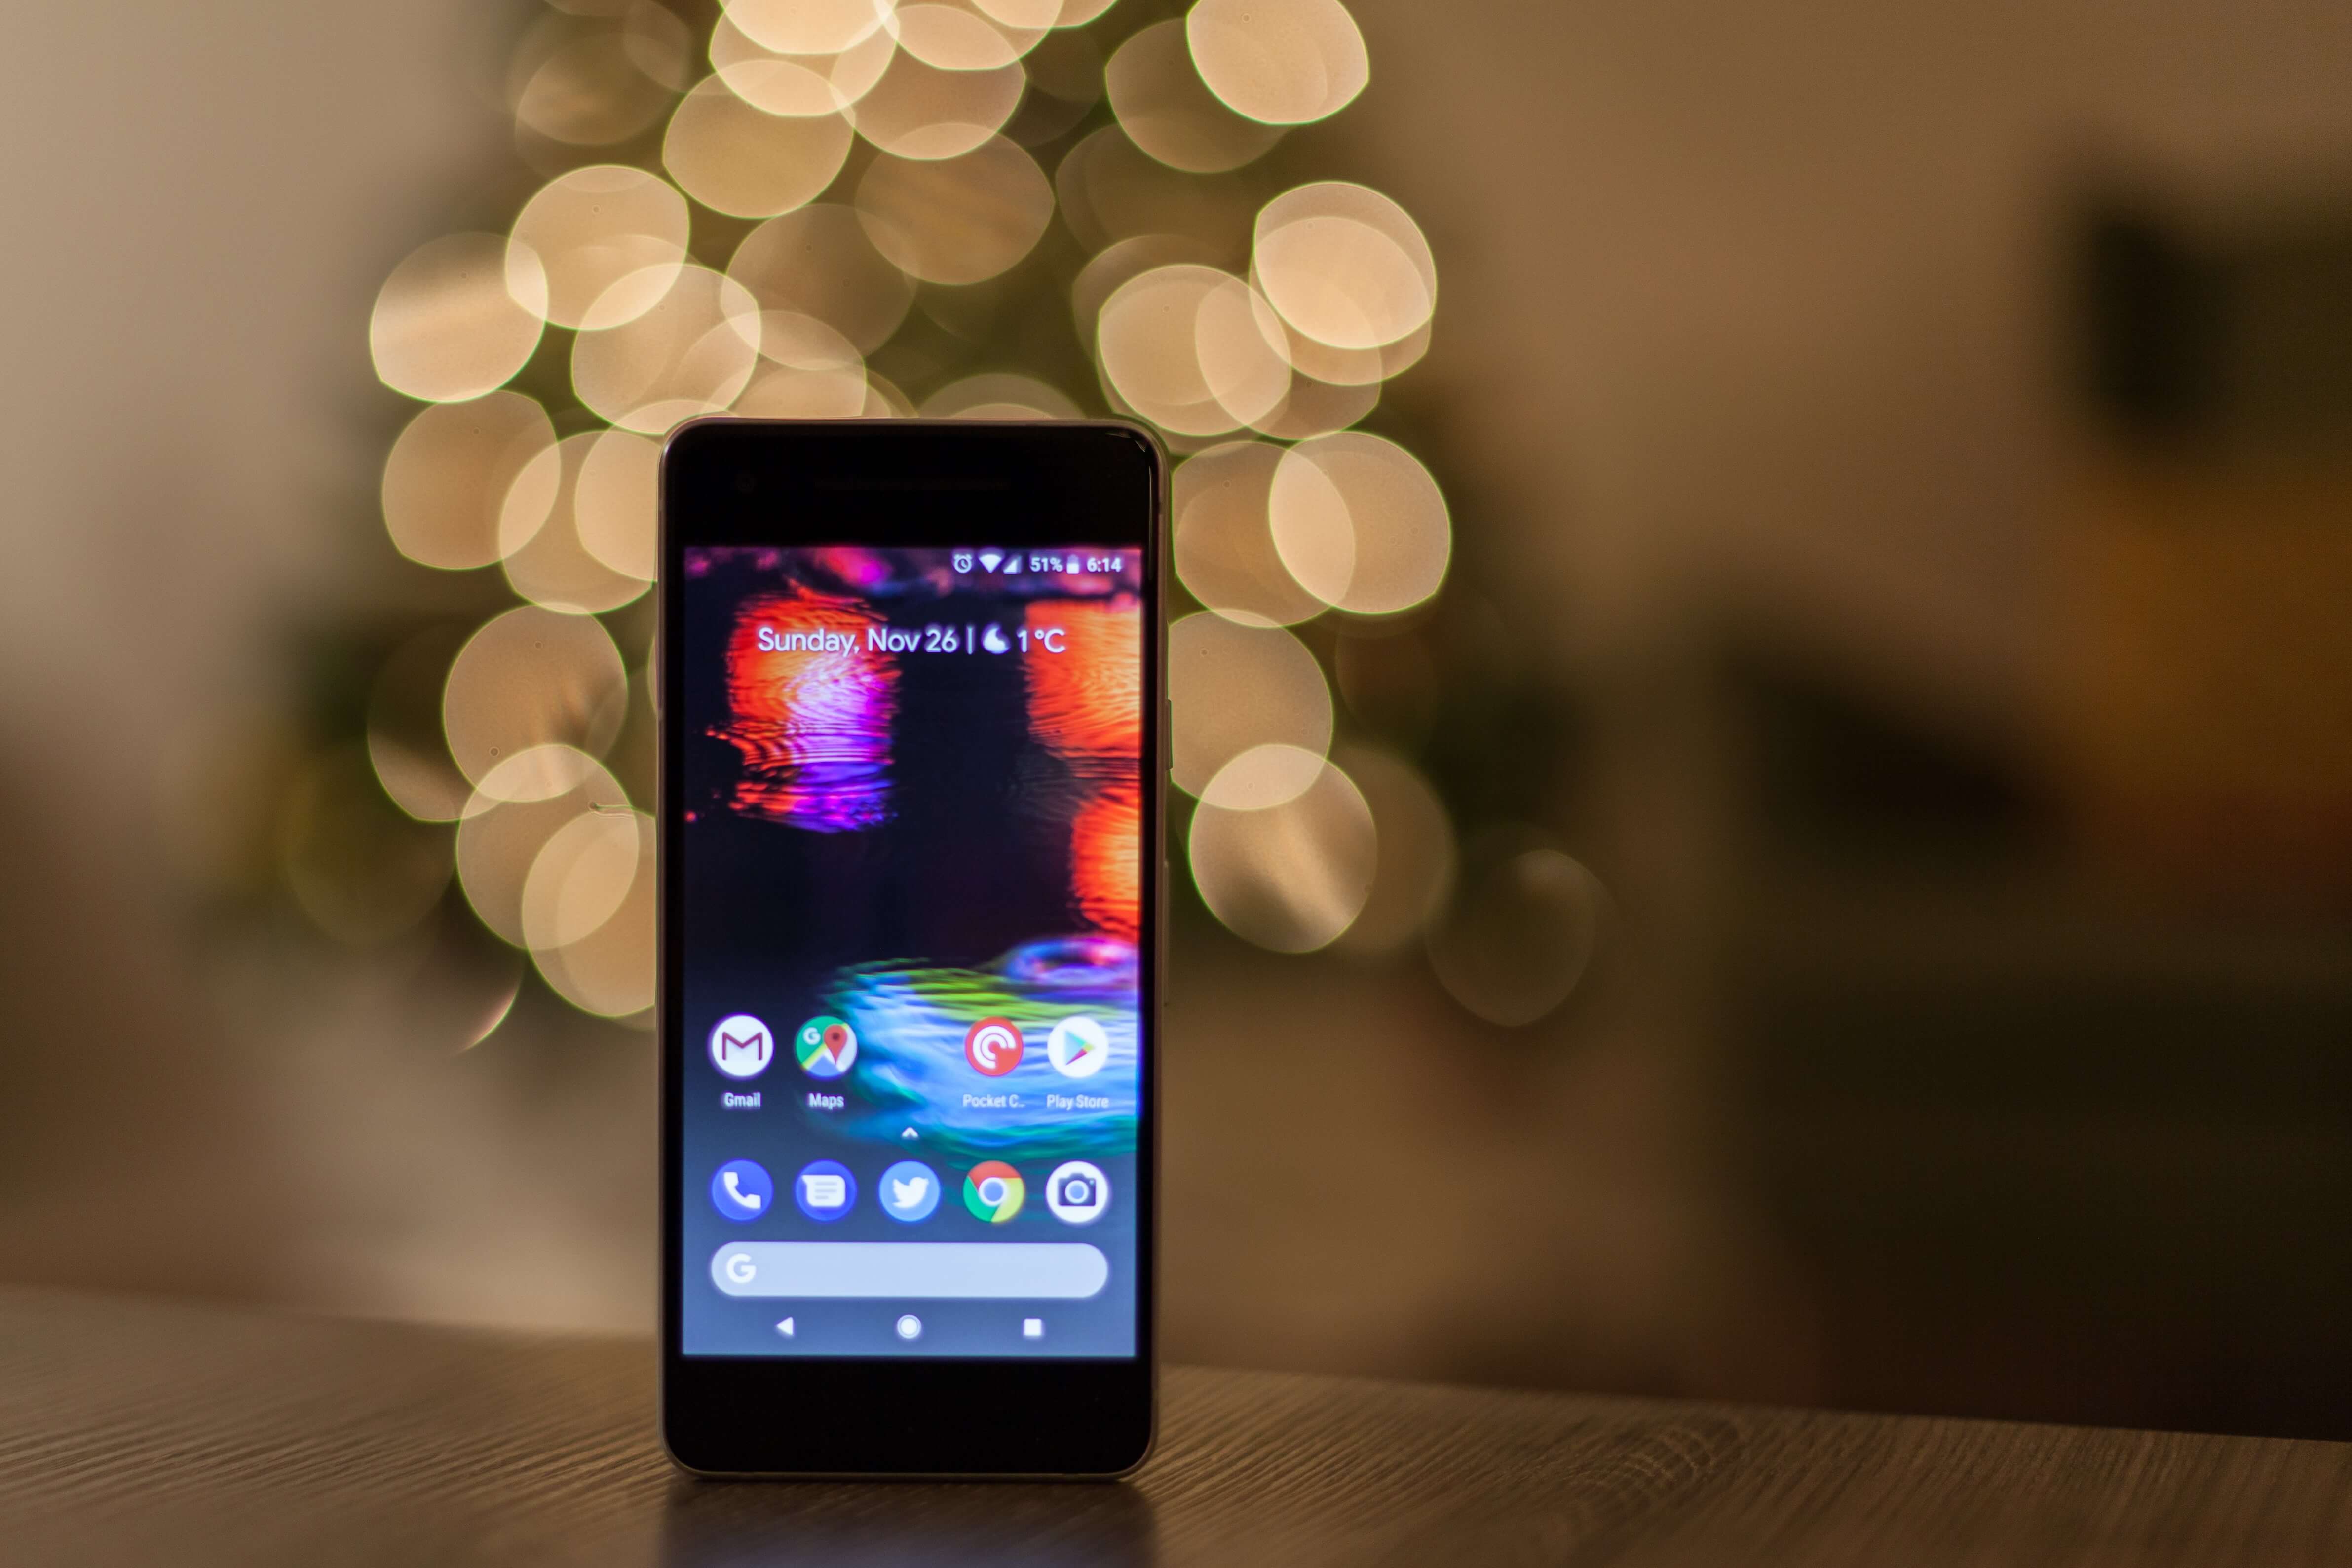 A smartphone turning on Christmas lights